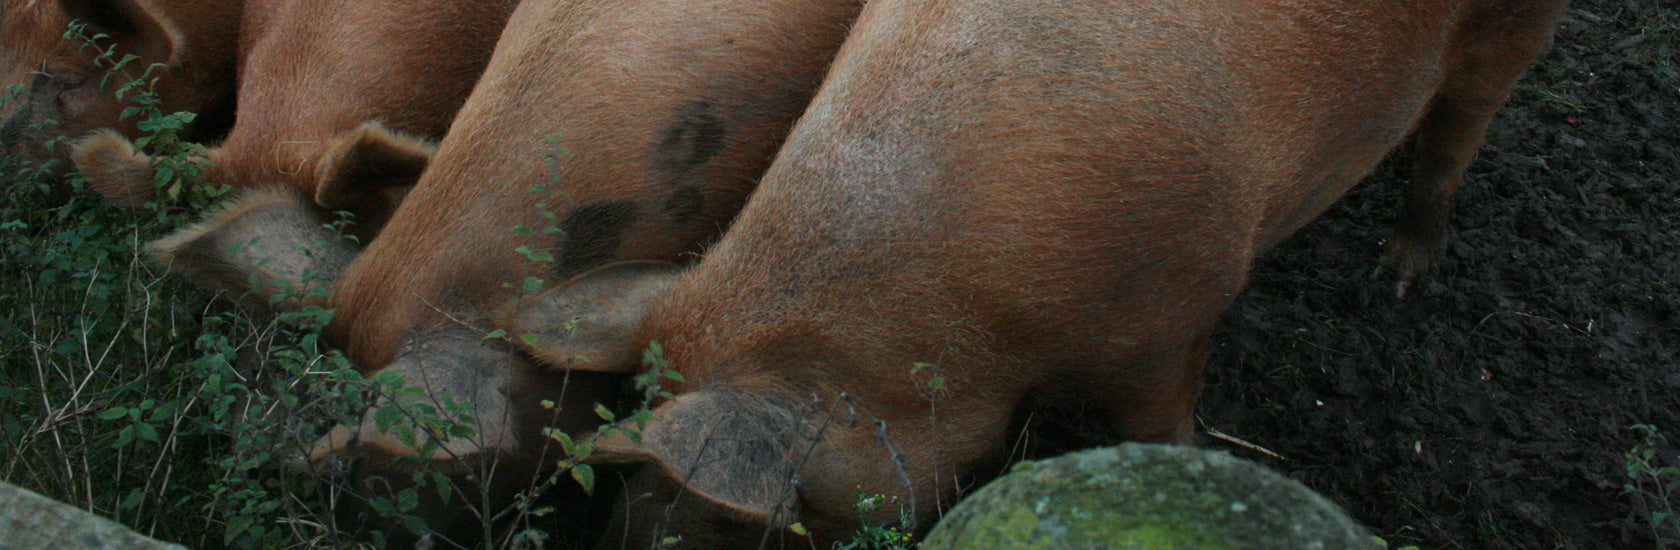 Provenance Tamworth Pigs